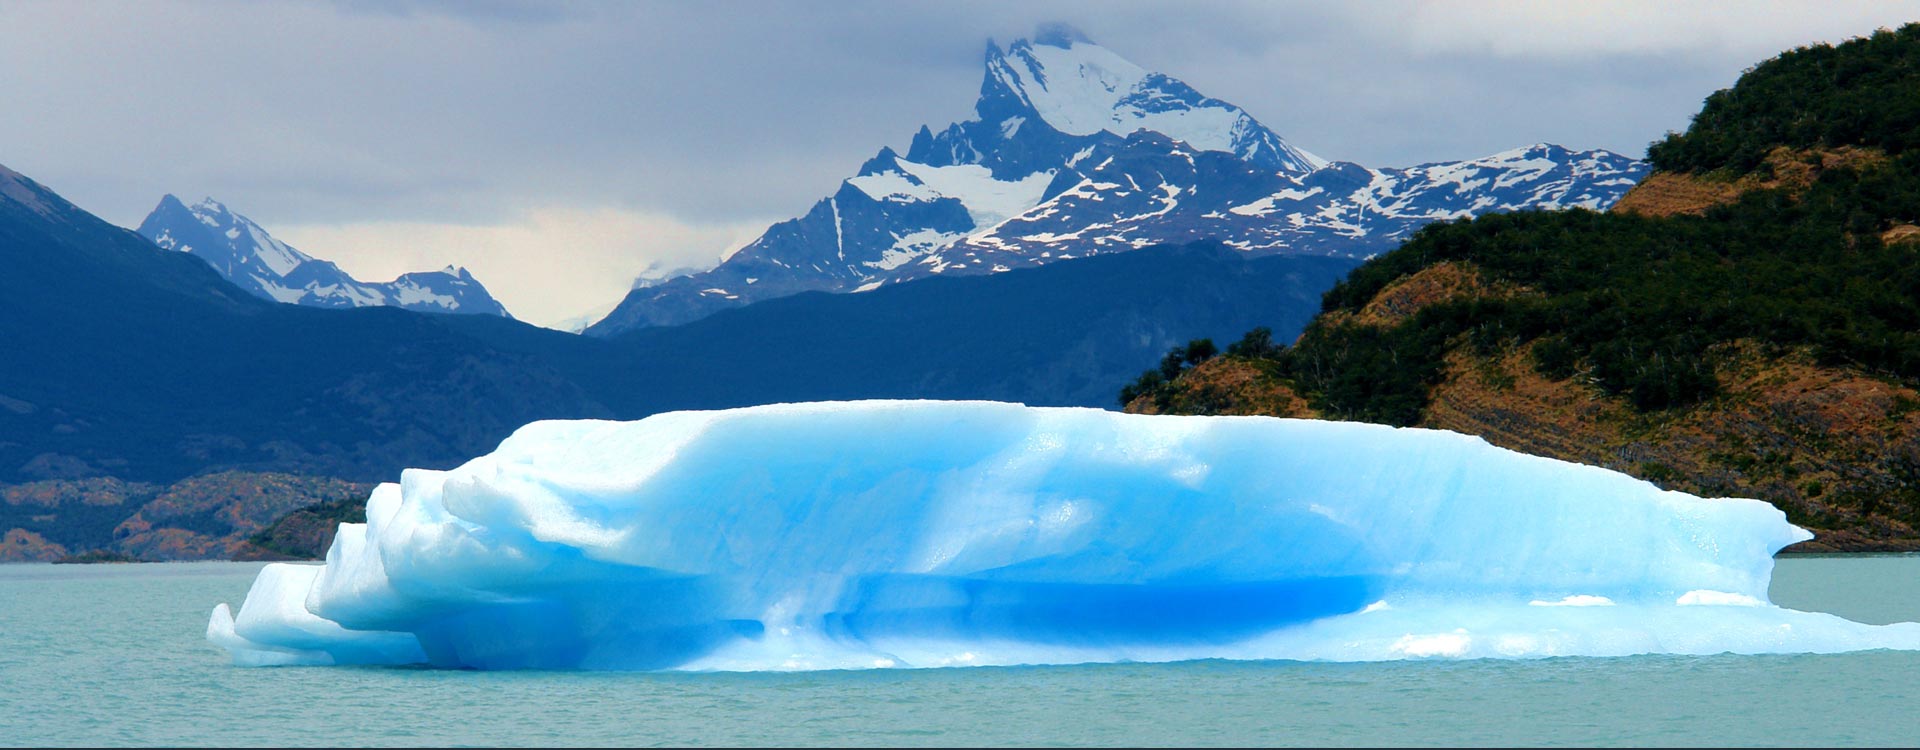 Iceberg erosionado